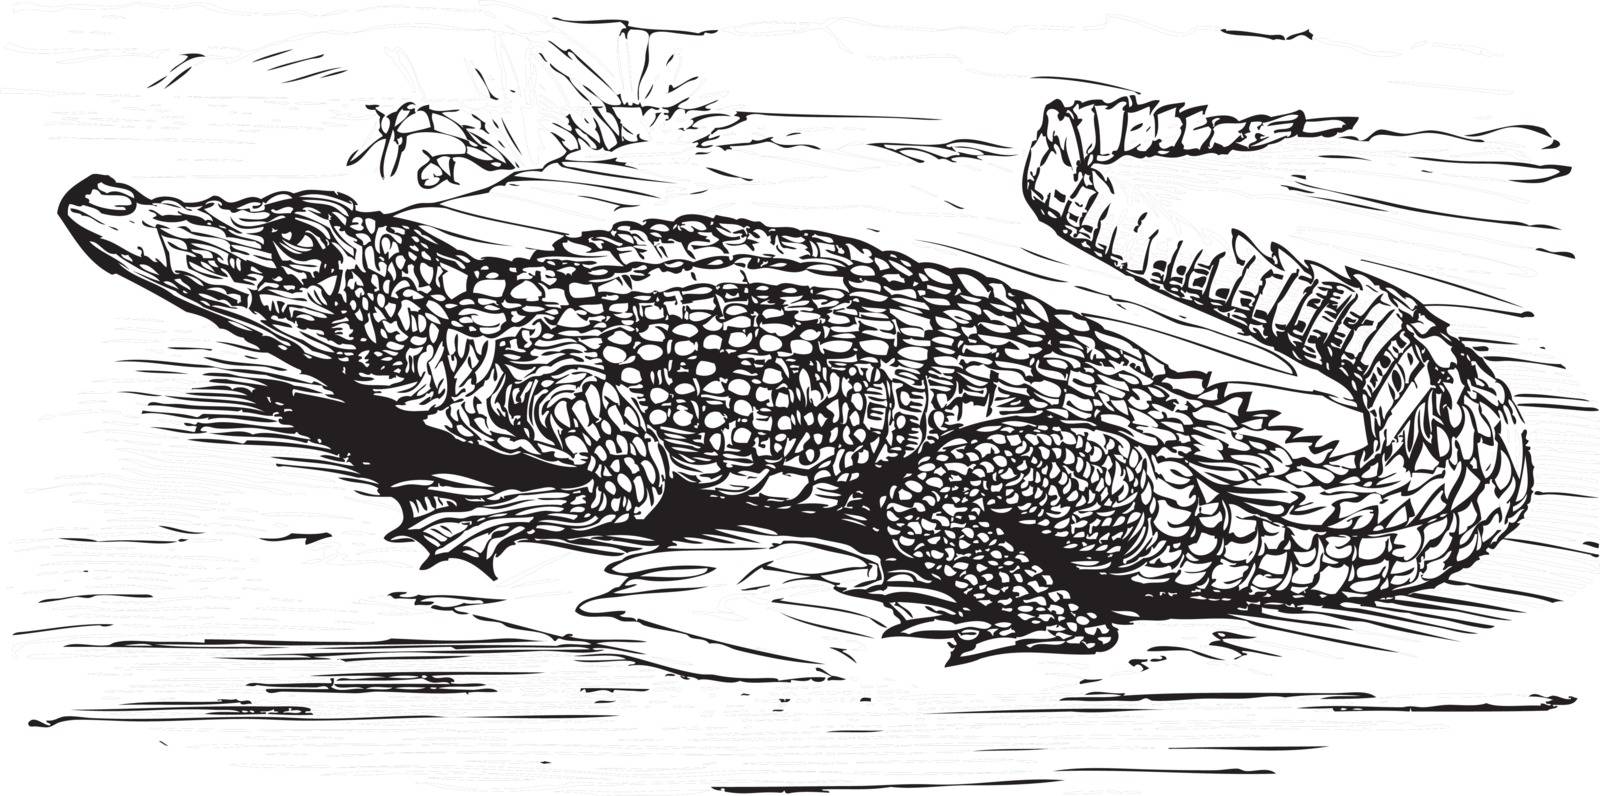 Saltwater crocodile engraved illustration by Morphart